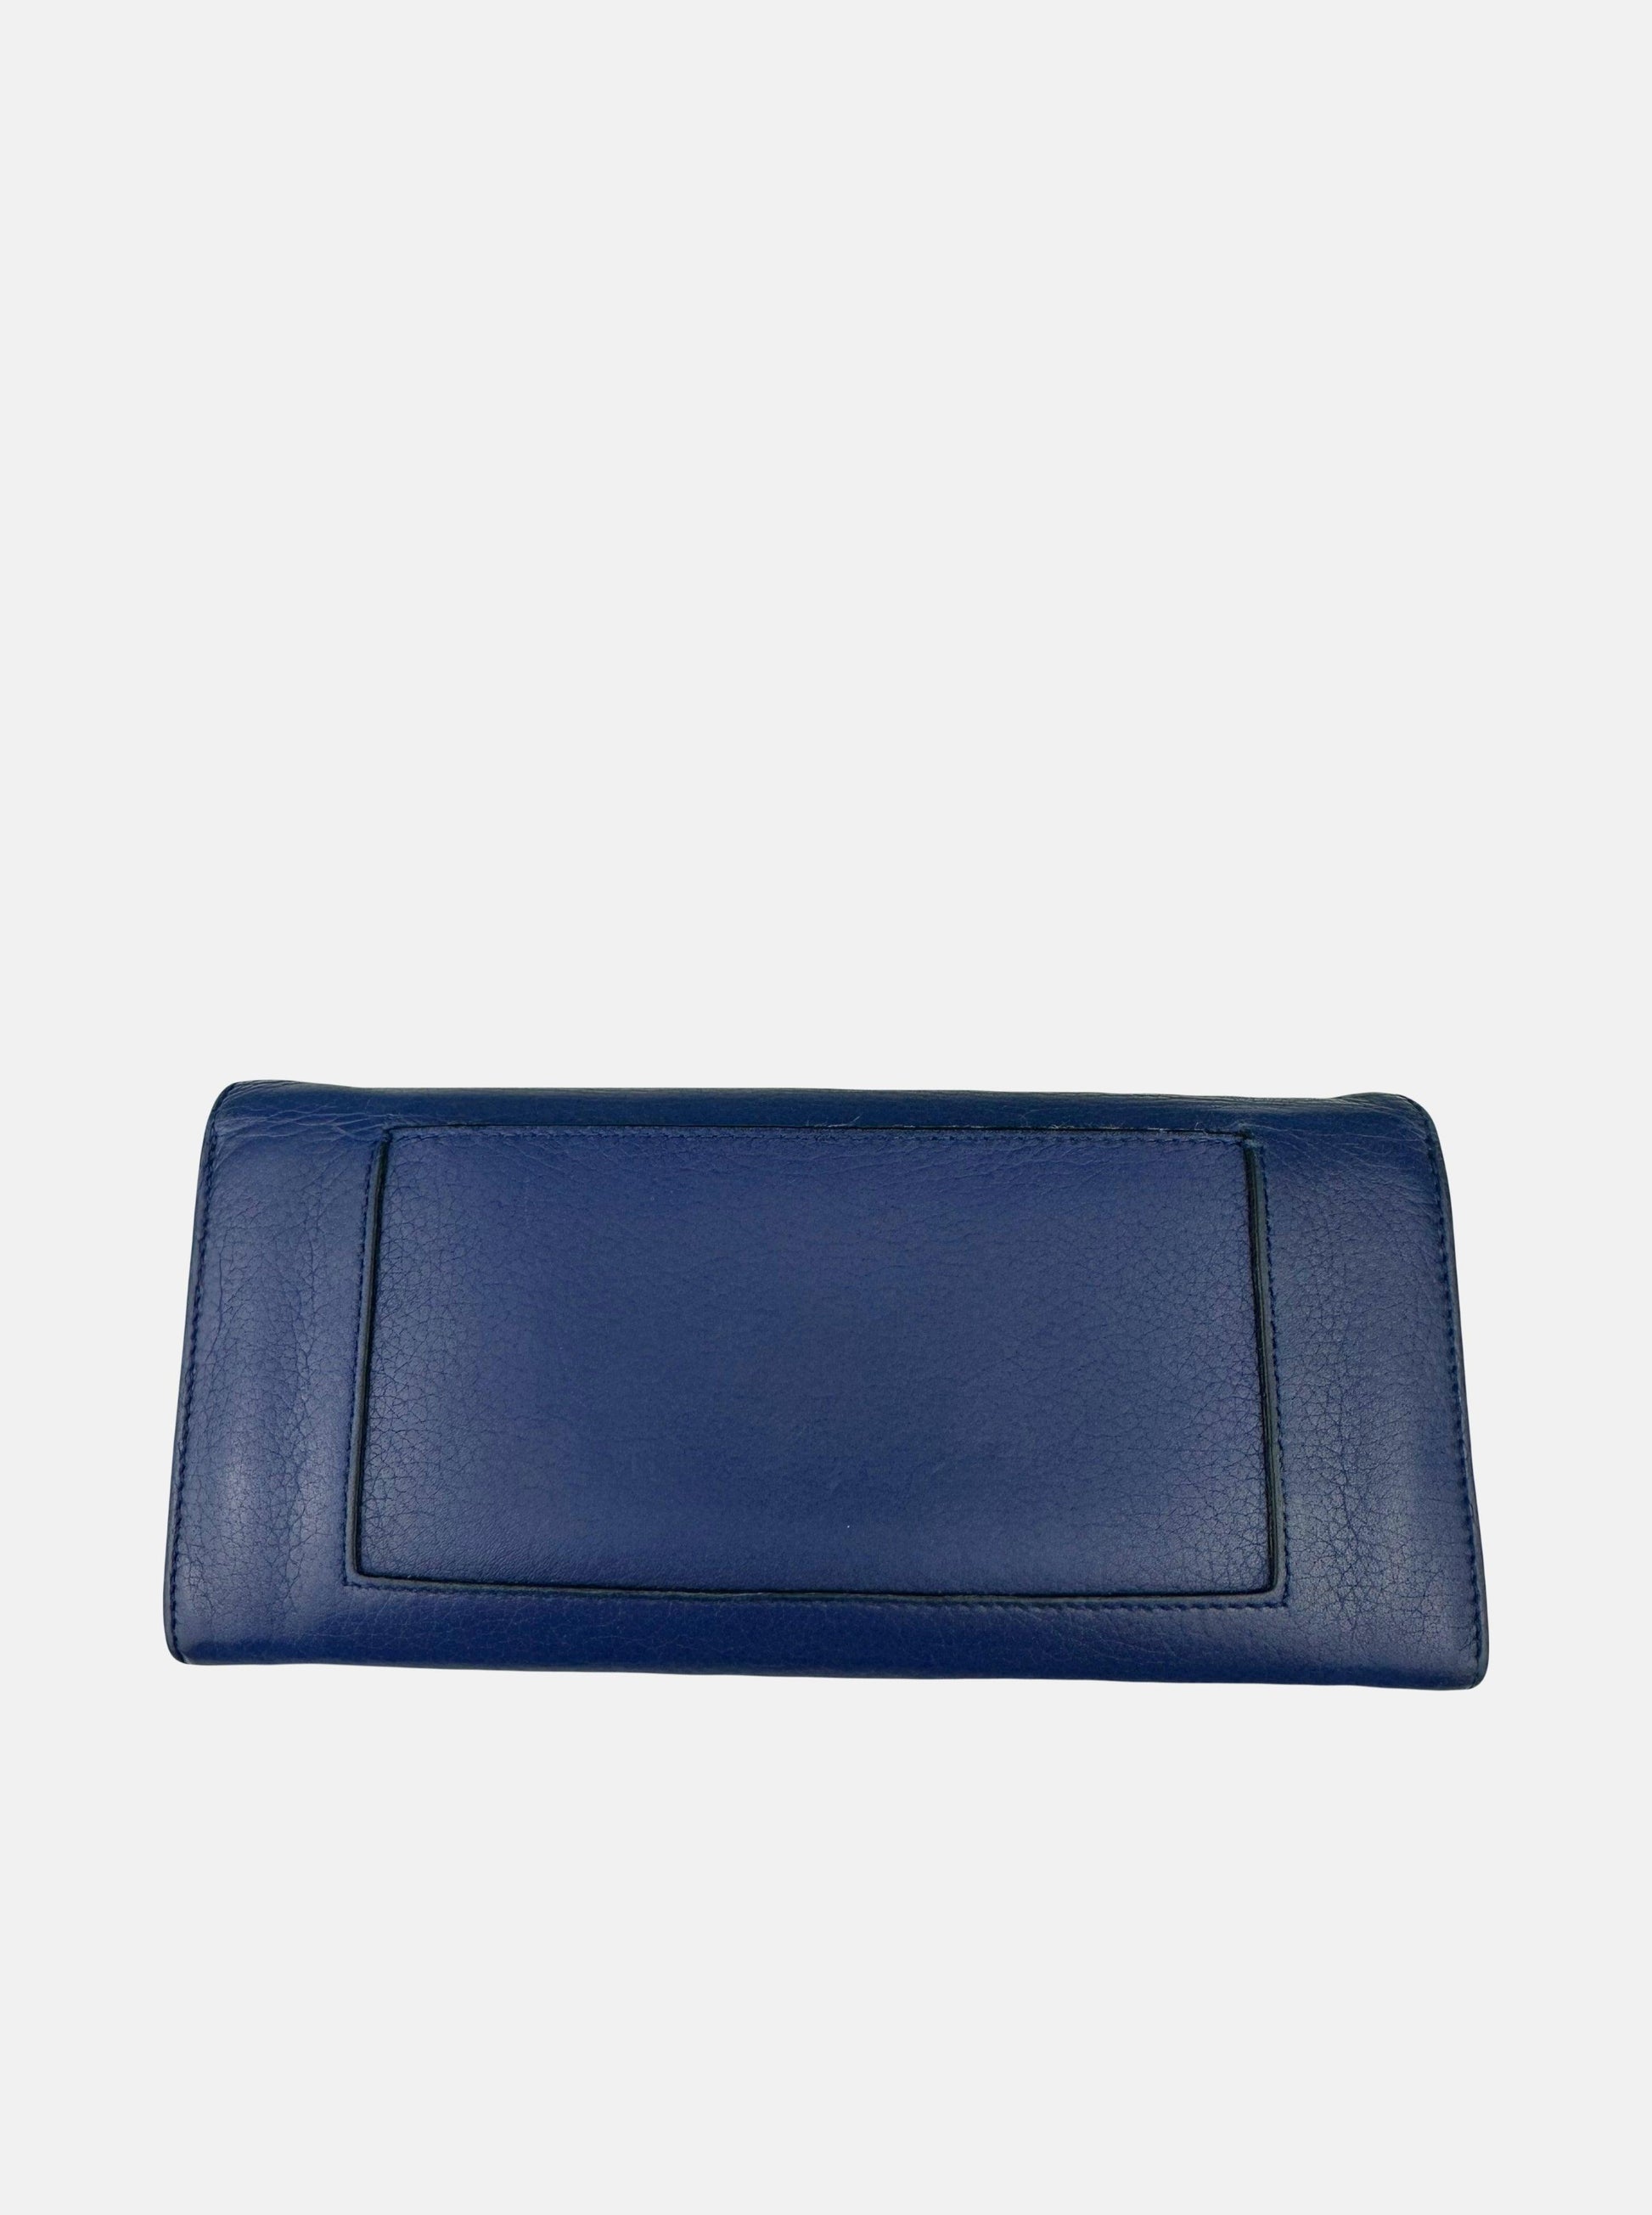 Blue Leather Multi-Compartment Purse - Zage Vintage